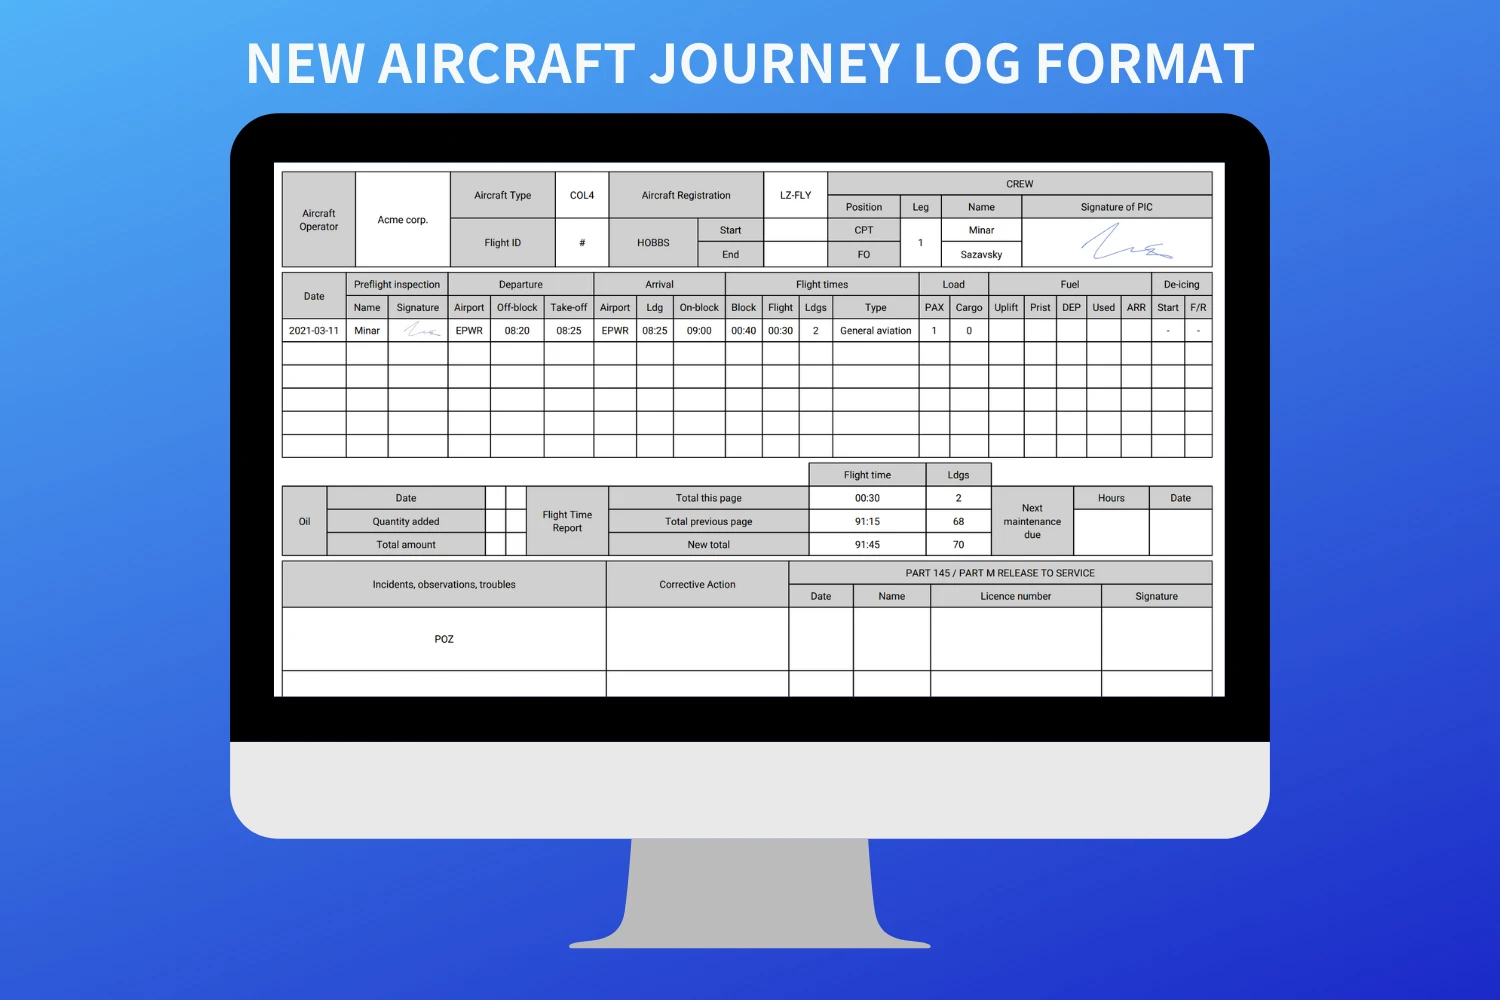 New Aircraft journey log export format